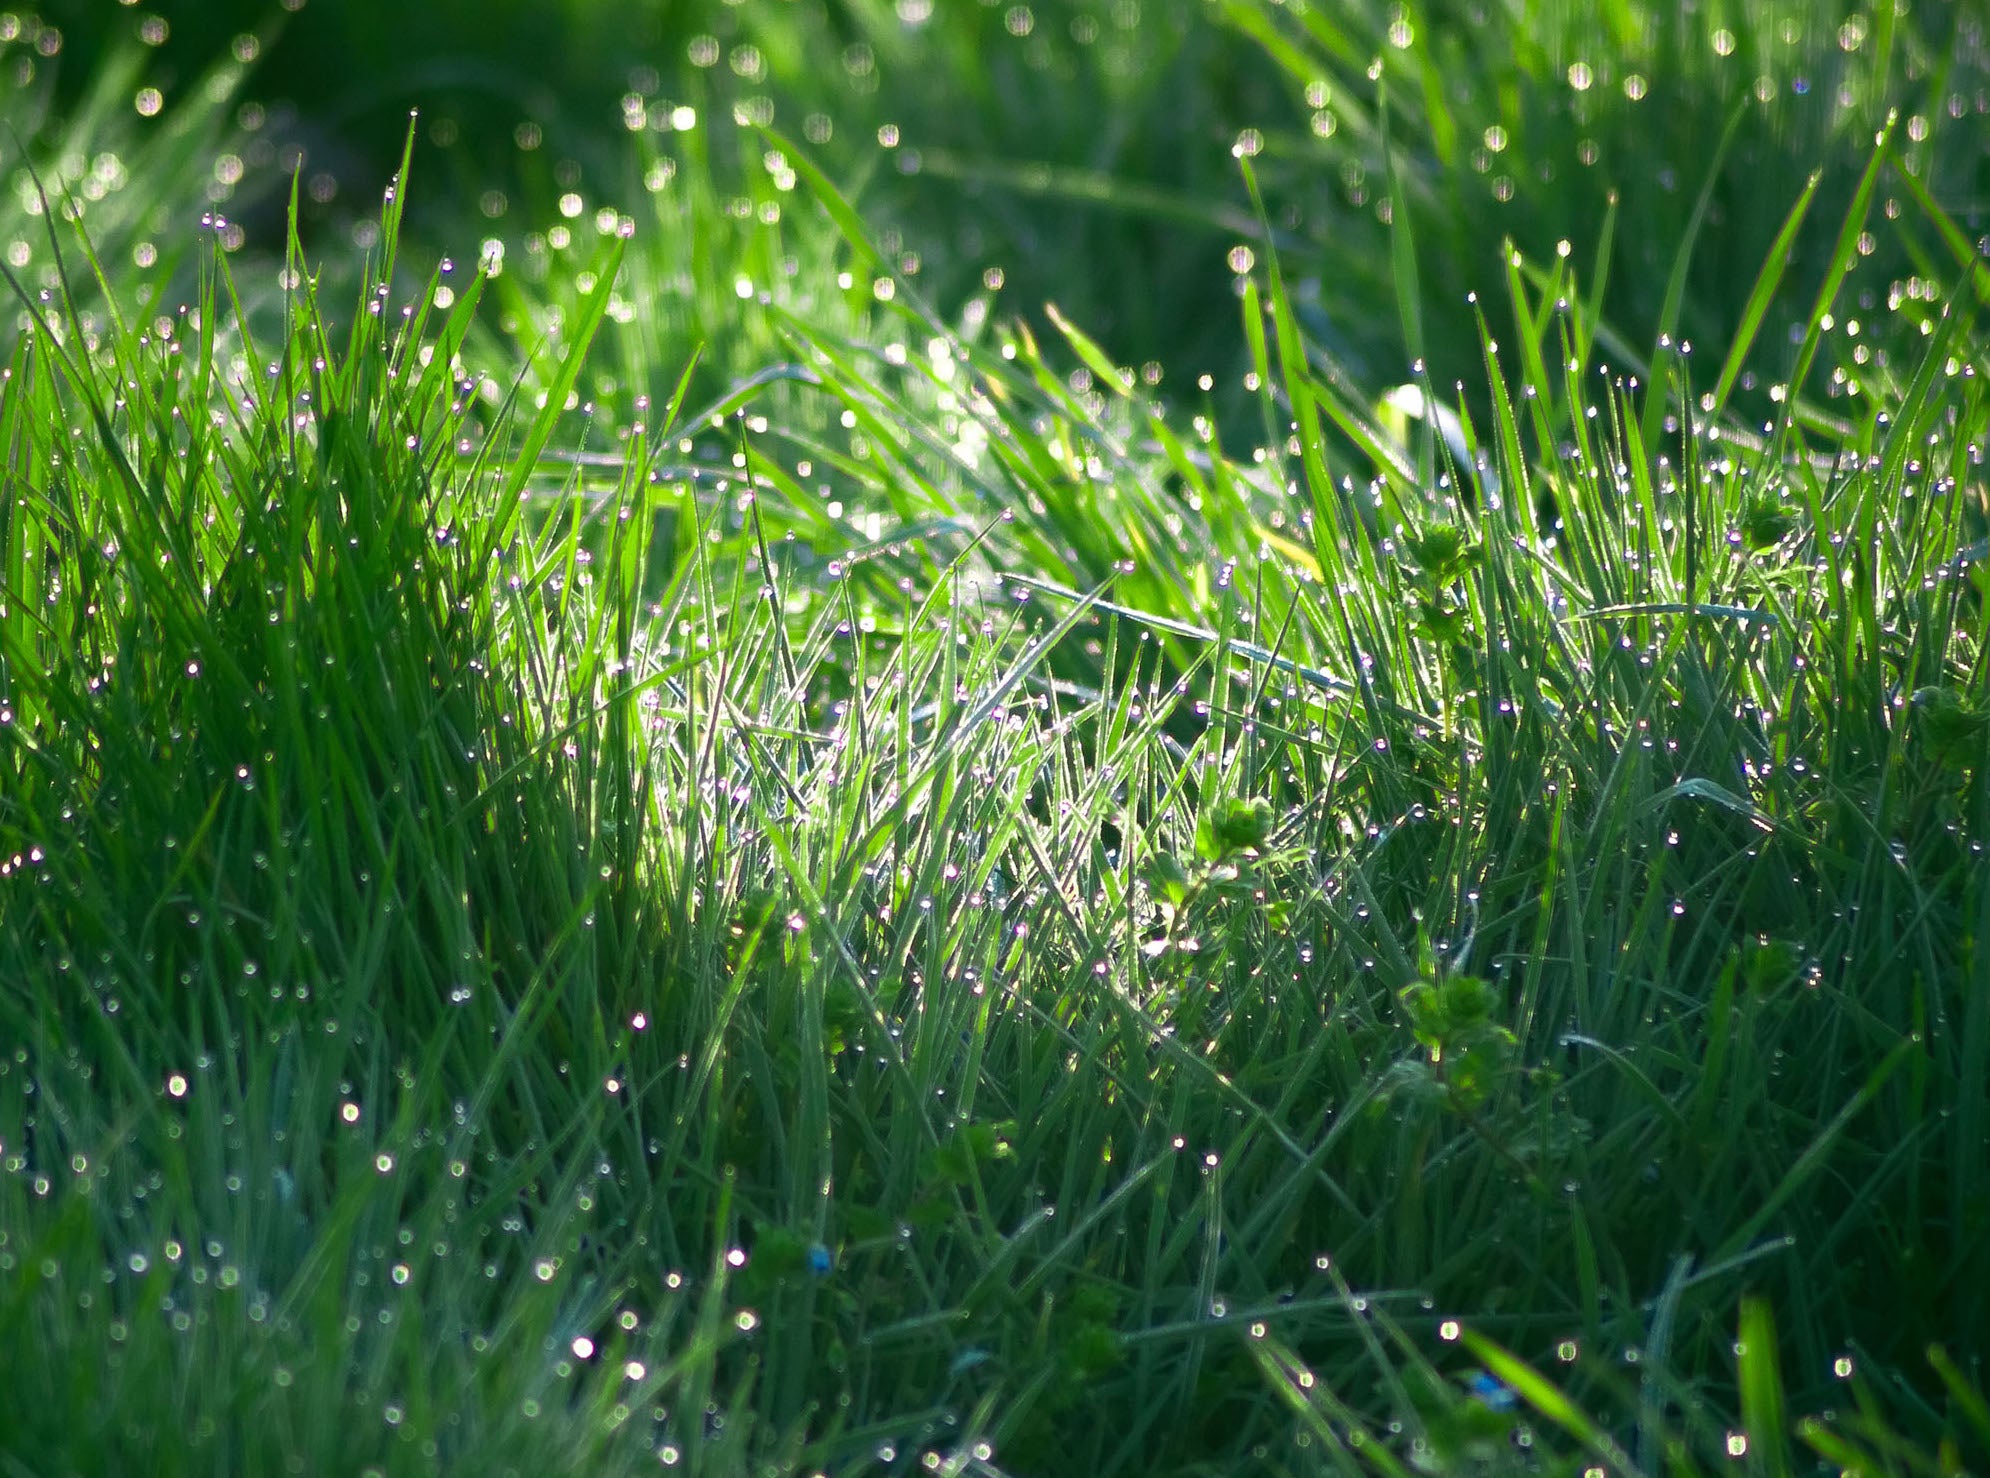 Wet grass in the sun